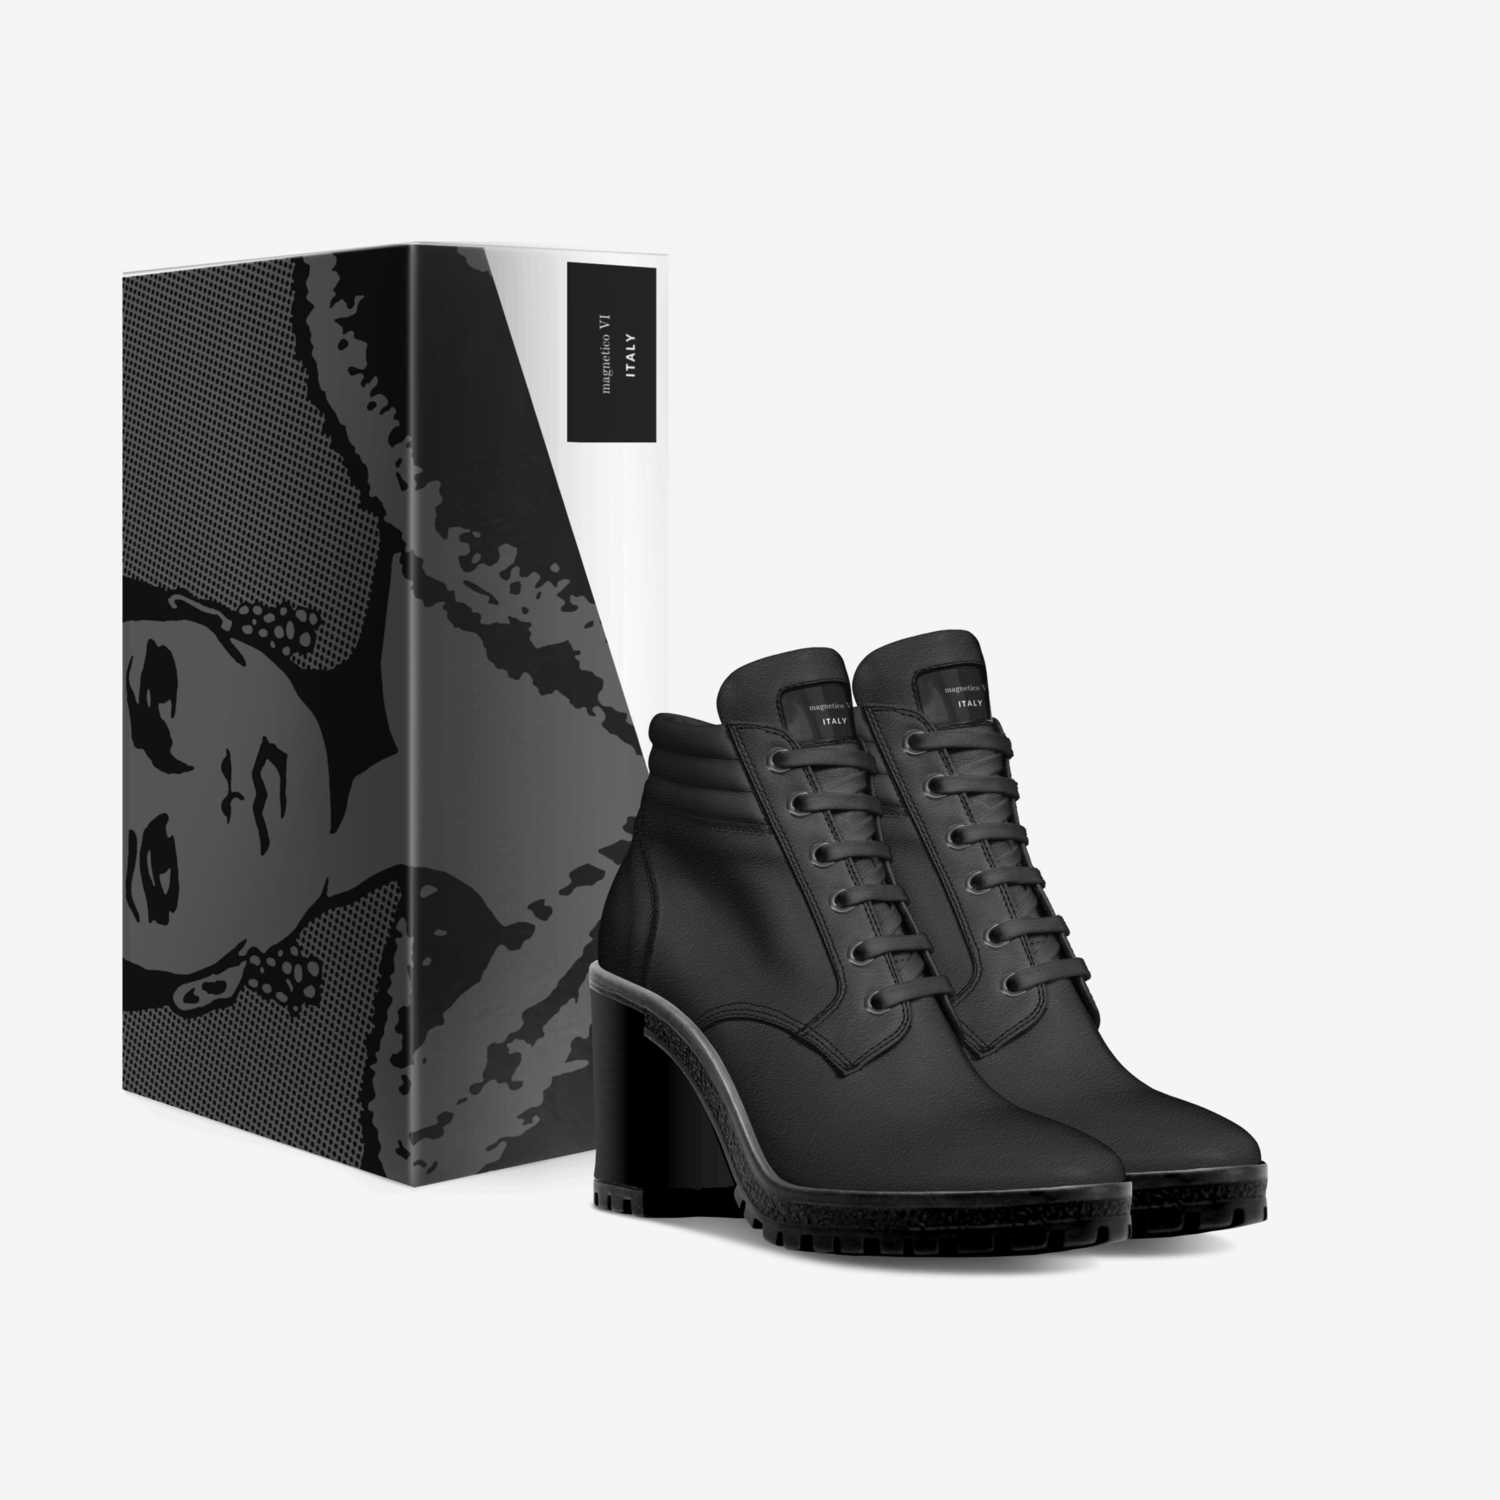 magnetico VI EBONY custom made in Italy shoes by Jesús Sandoval | Box view